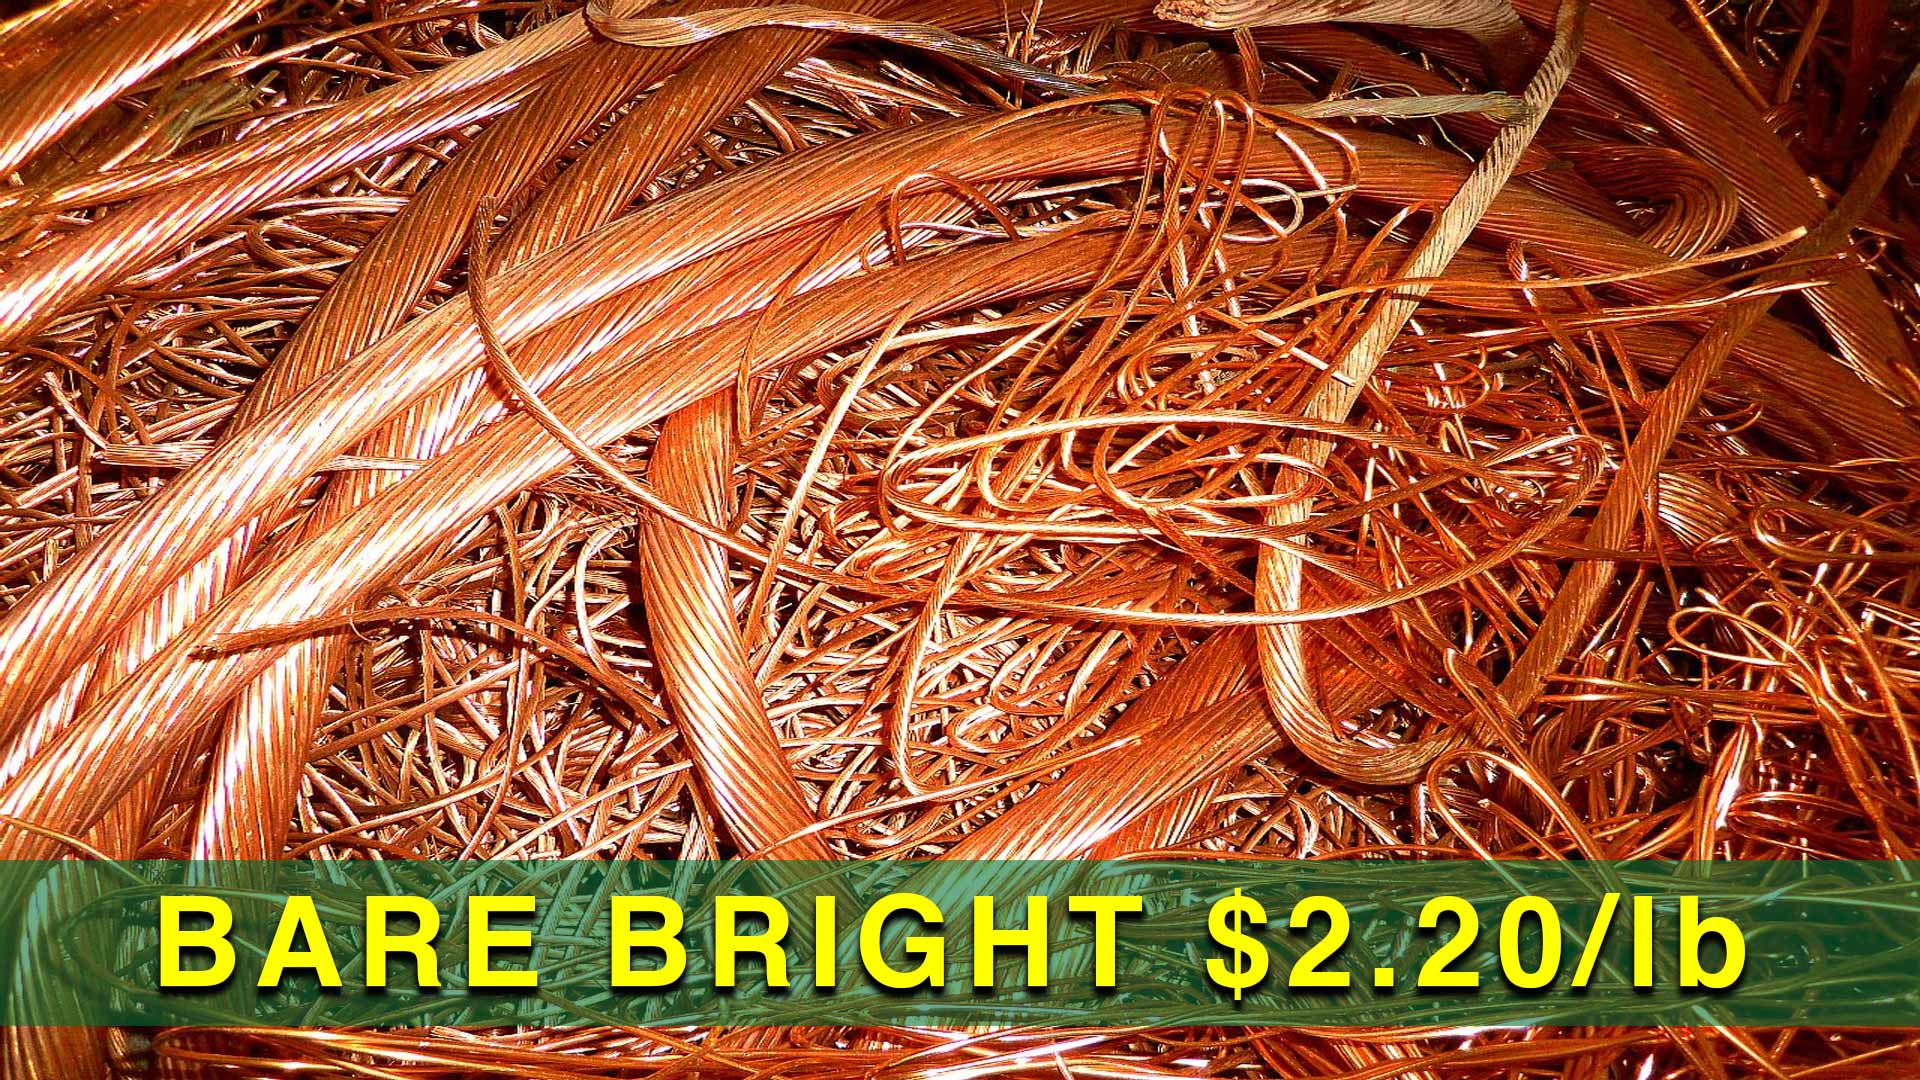 Scrap Metal Prices Philadelphia #1 Copper #2 Copper Brass Roofing Copper Cord wire ROMEX THN Aluminum Cans Sheet Extrusions Copper Aluminum Radiators 